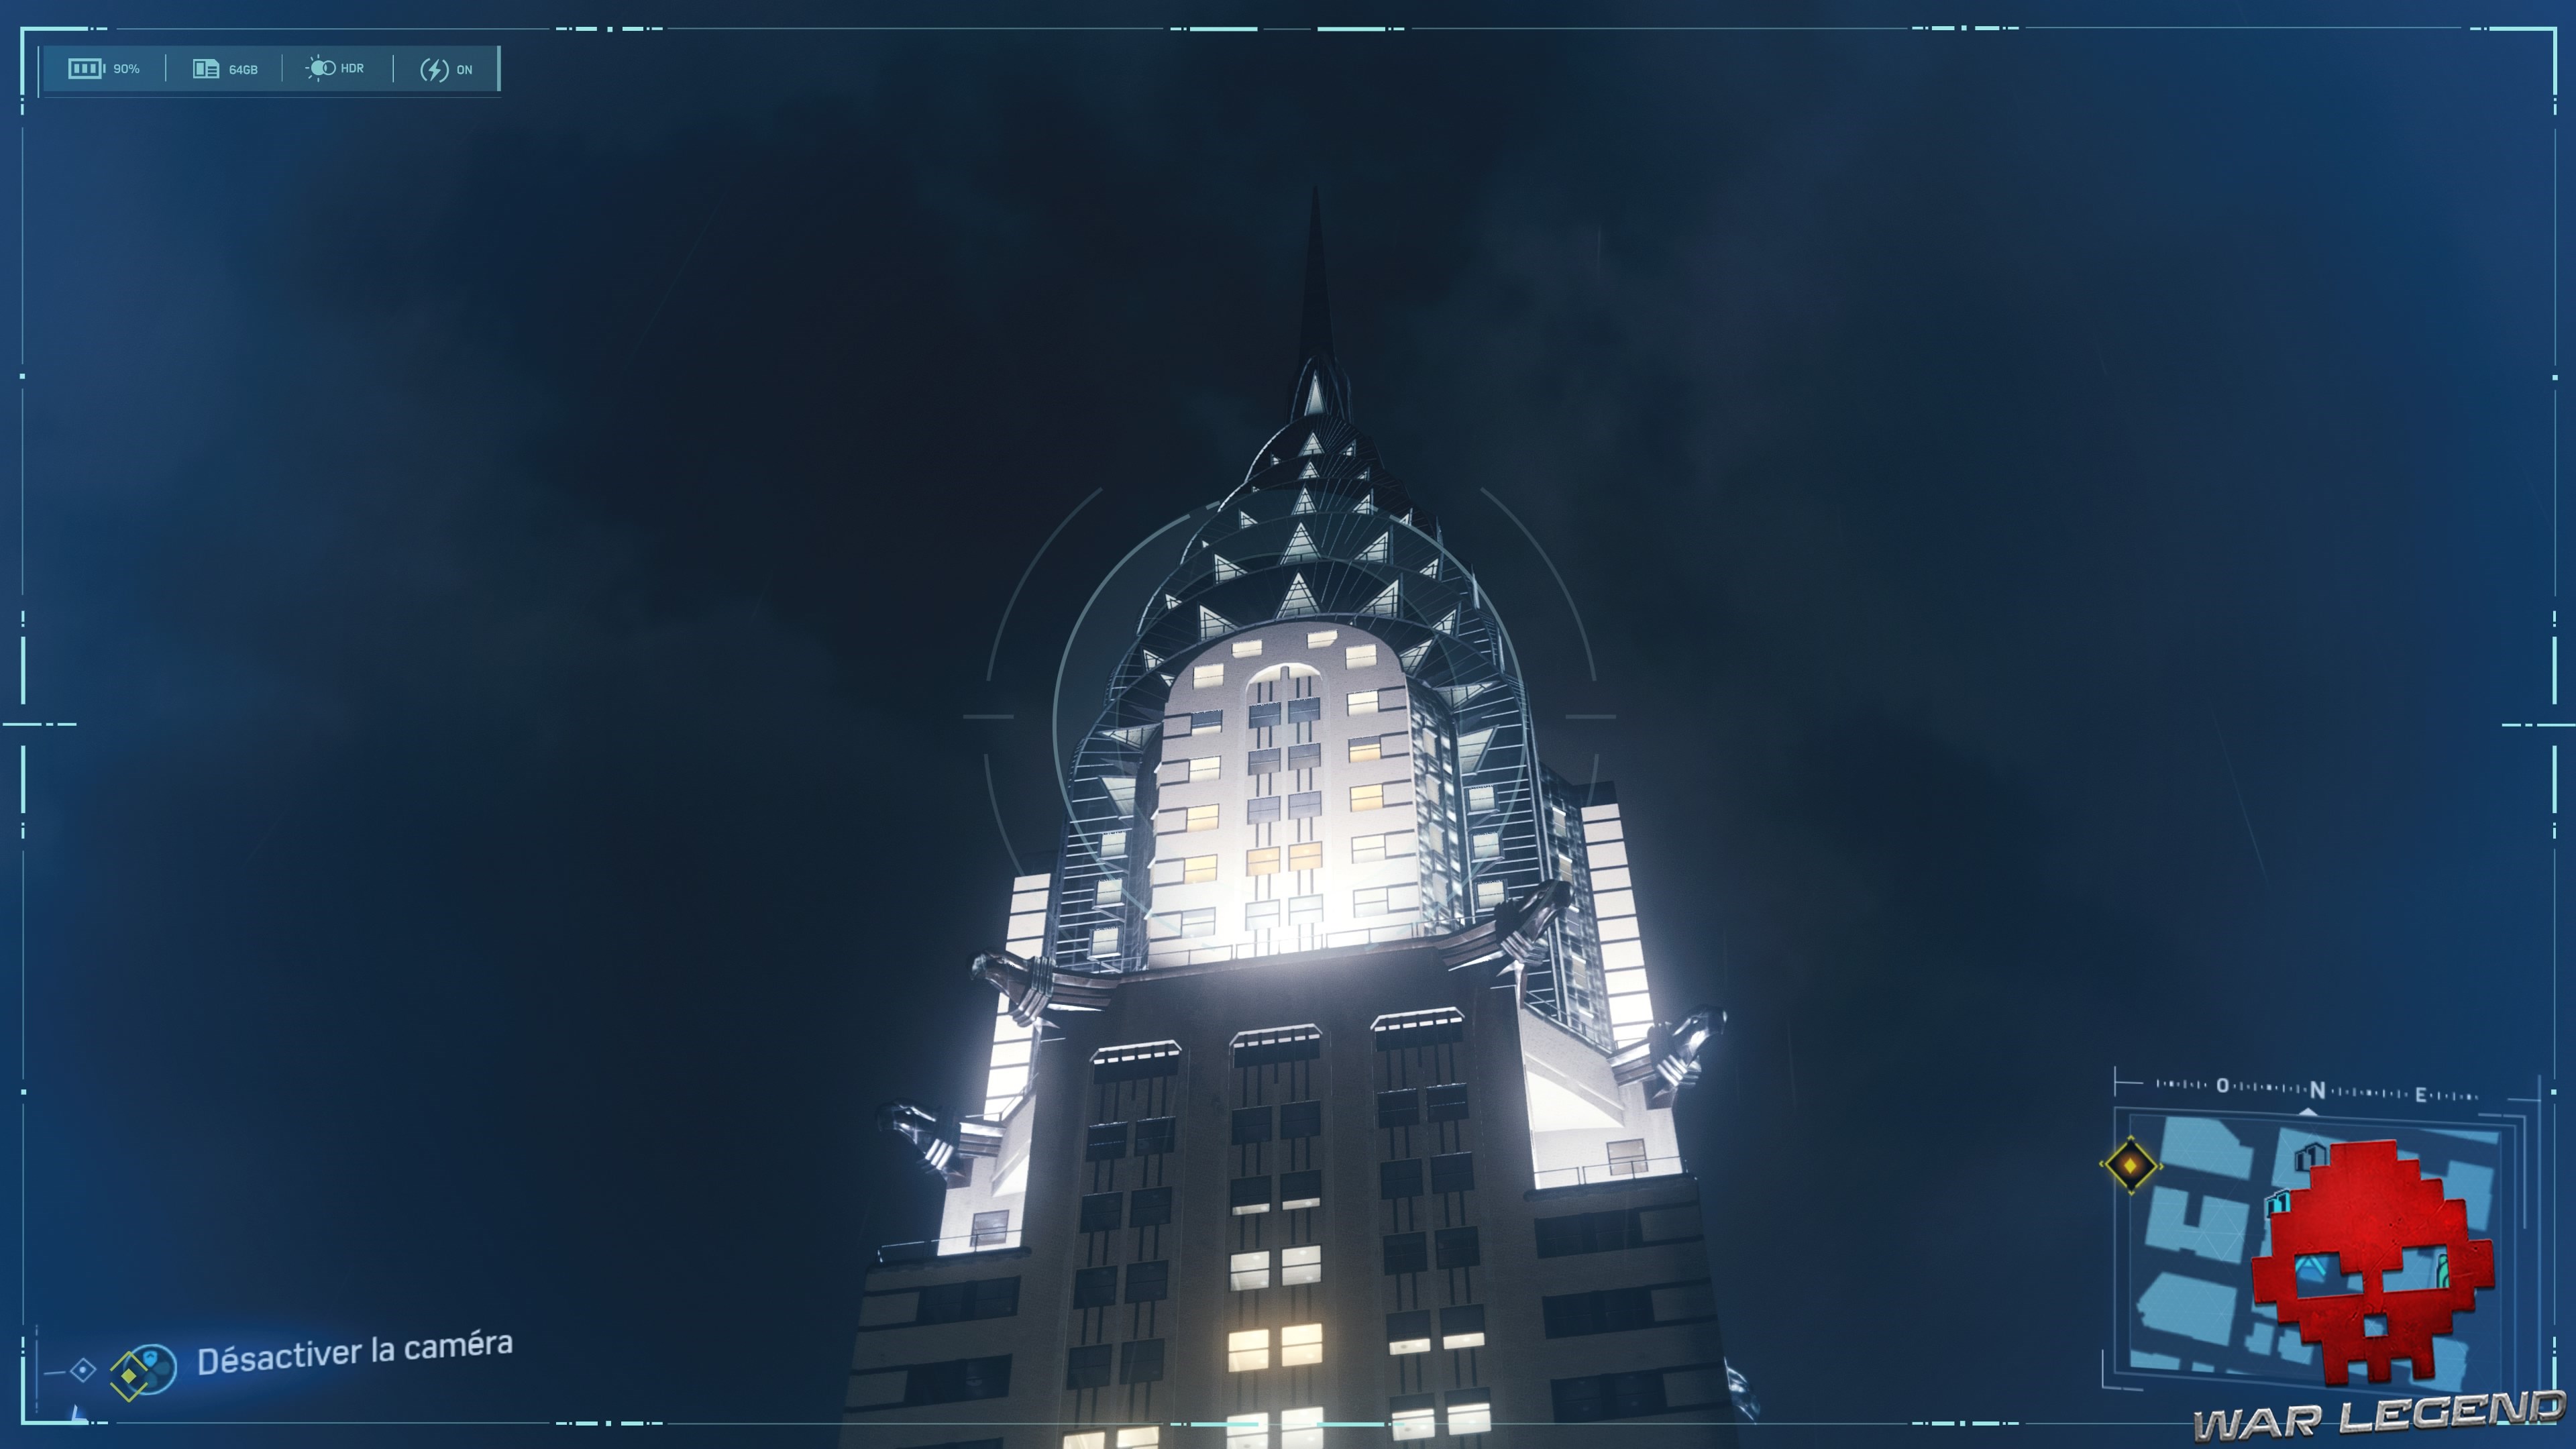 Spider-Man Monuments Midtown Chrysler Building photo